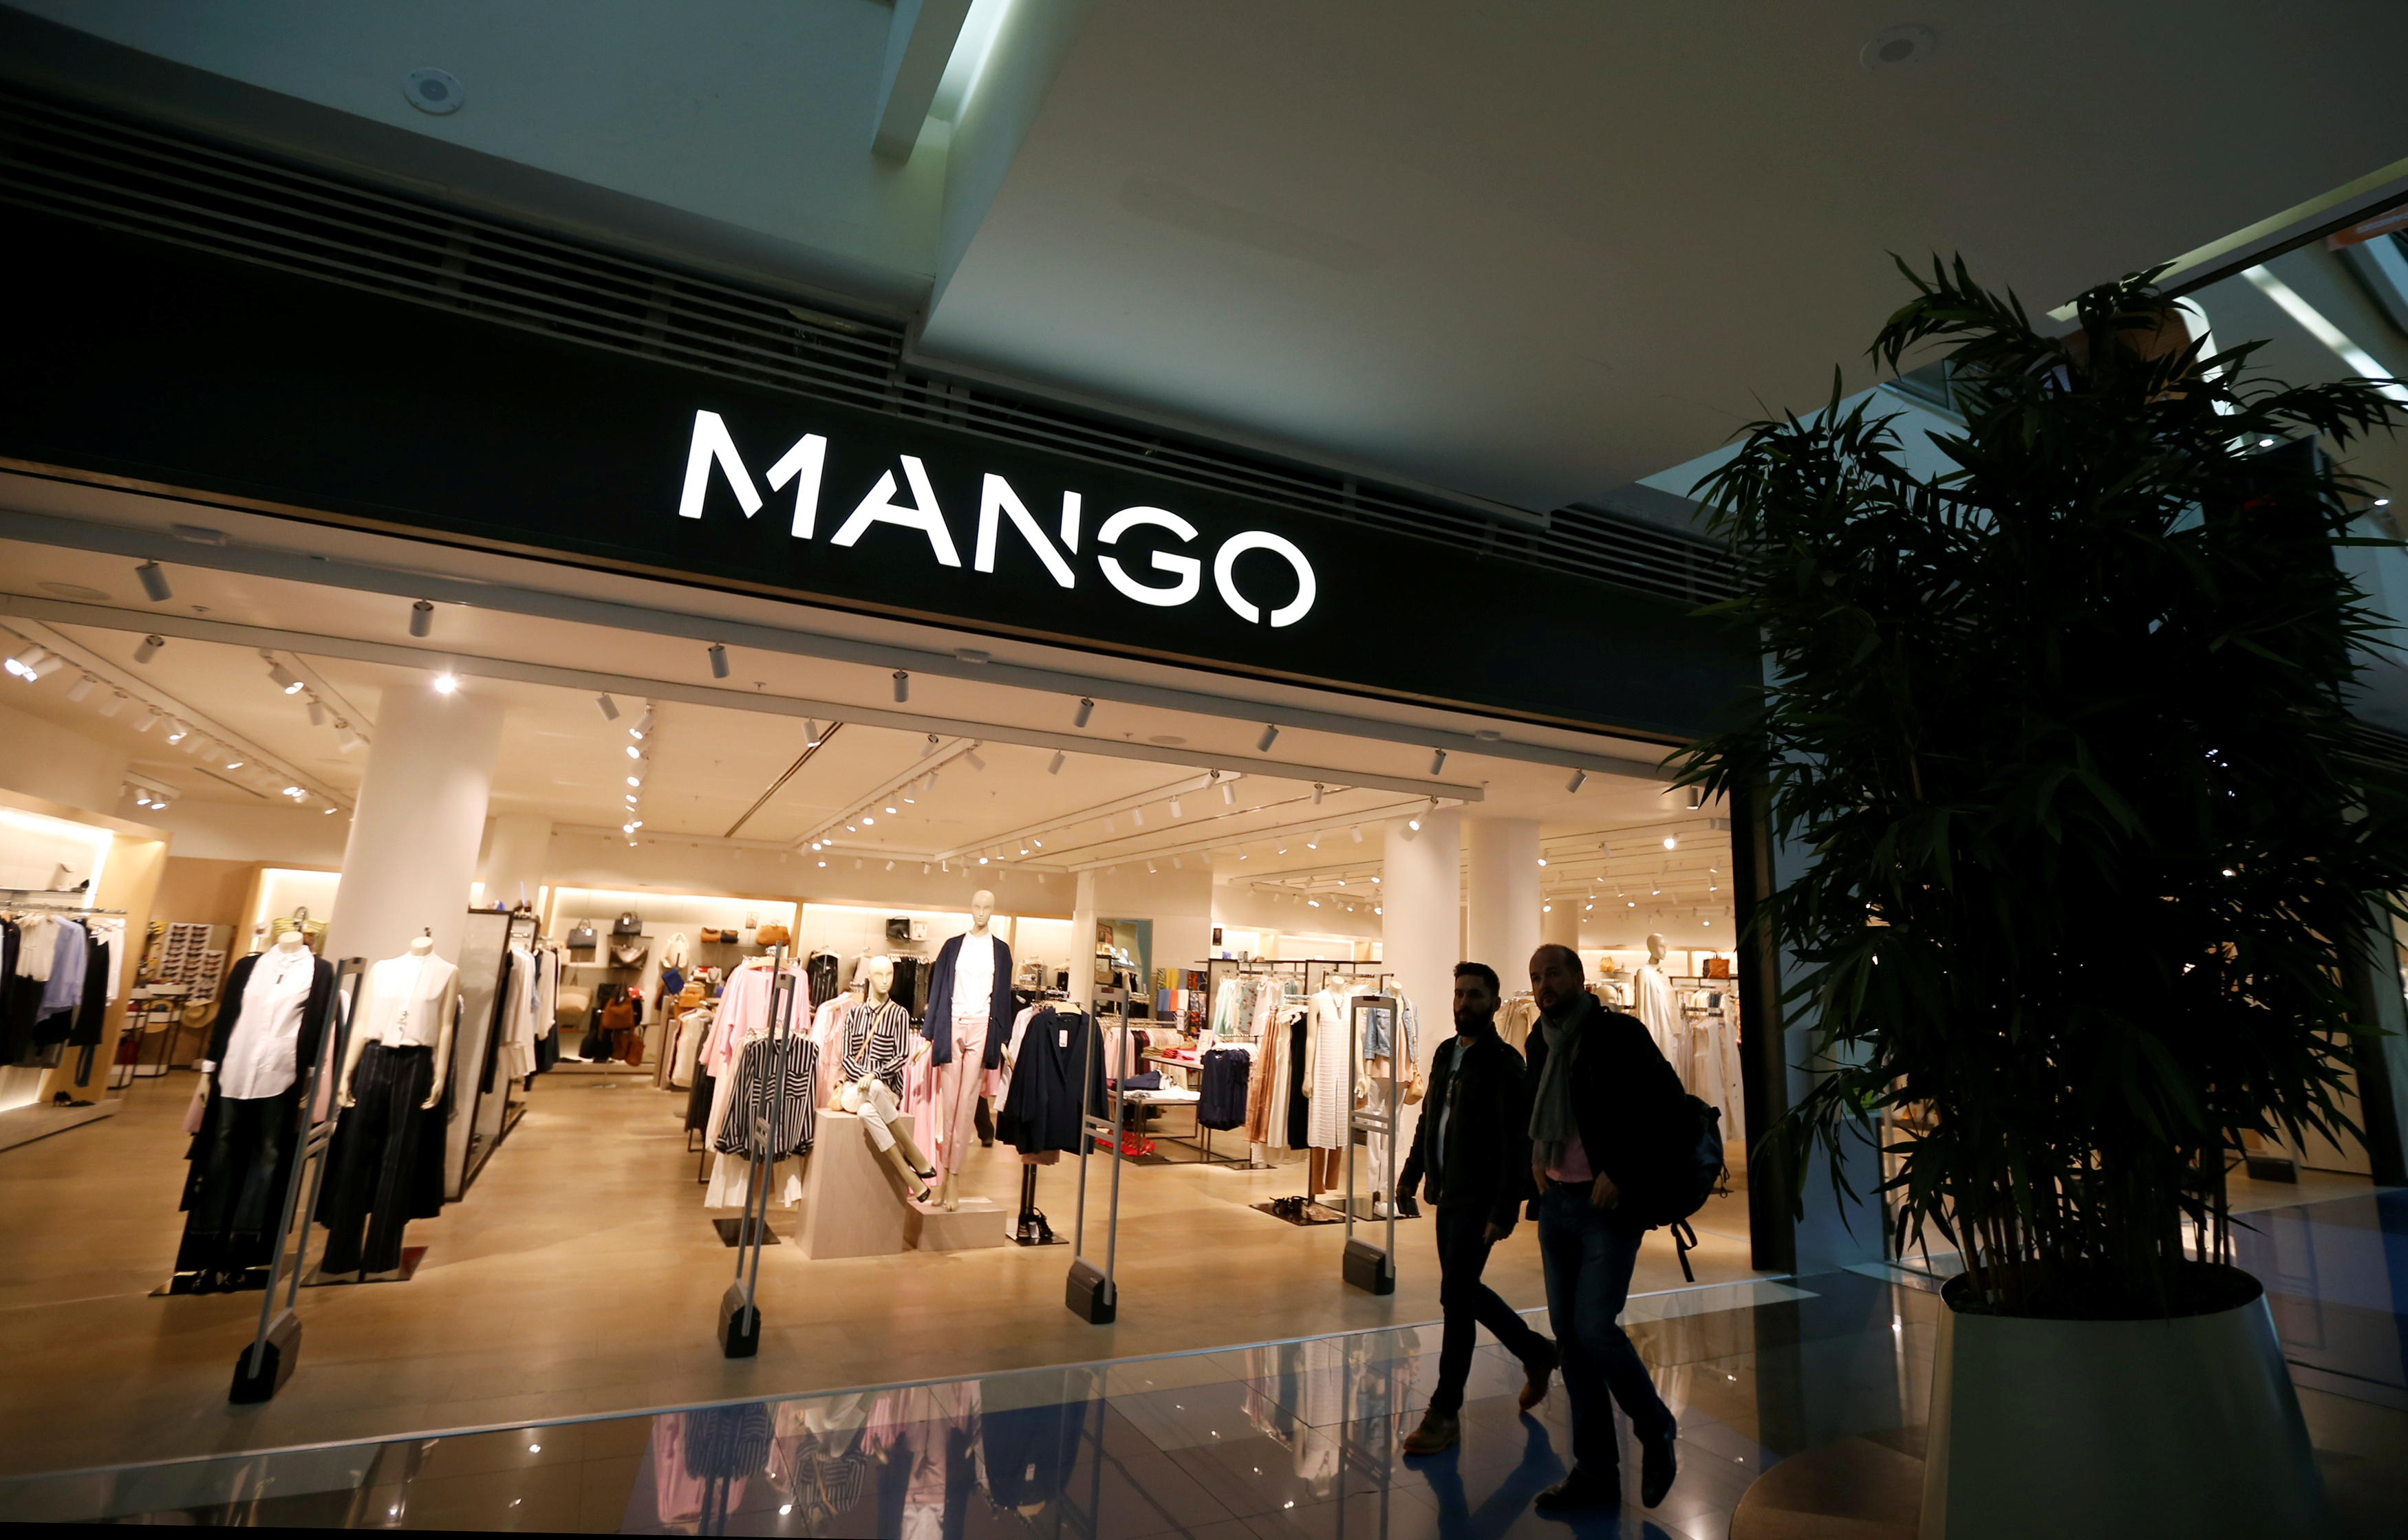 11 ofertas de Mango Outlet por menos 11 euros con los que ahorrar. | Business Insider